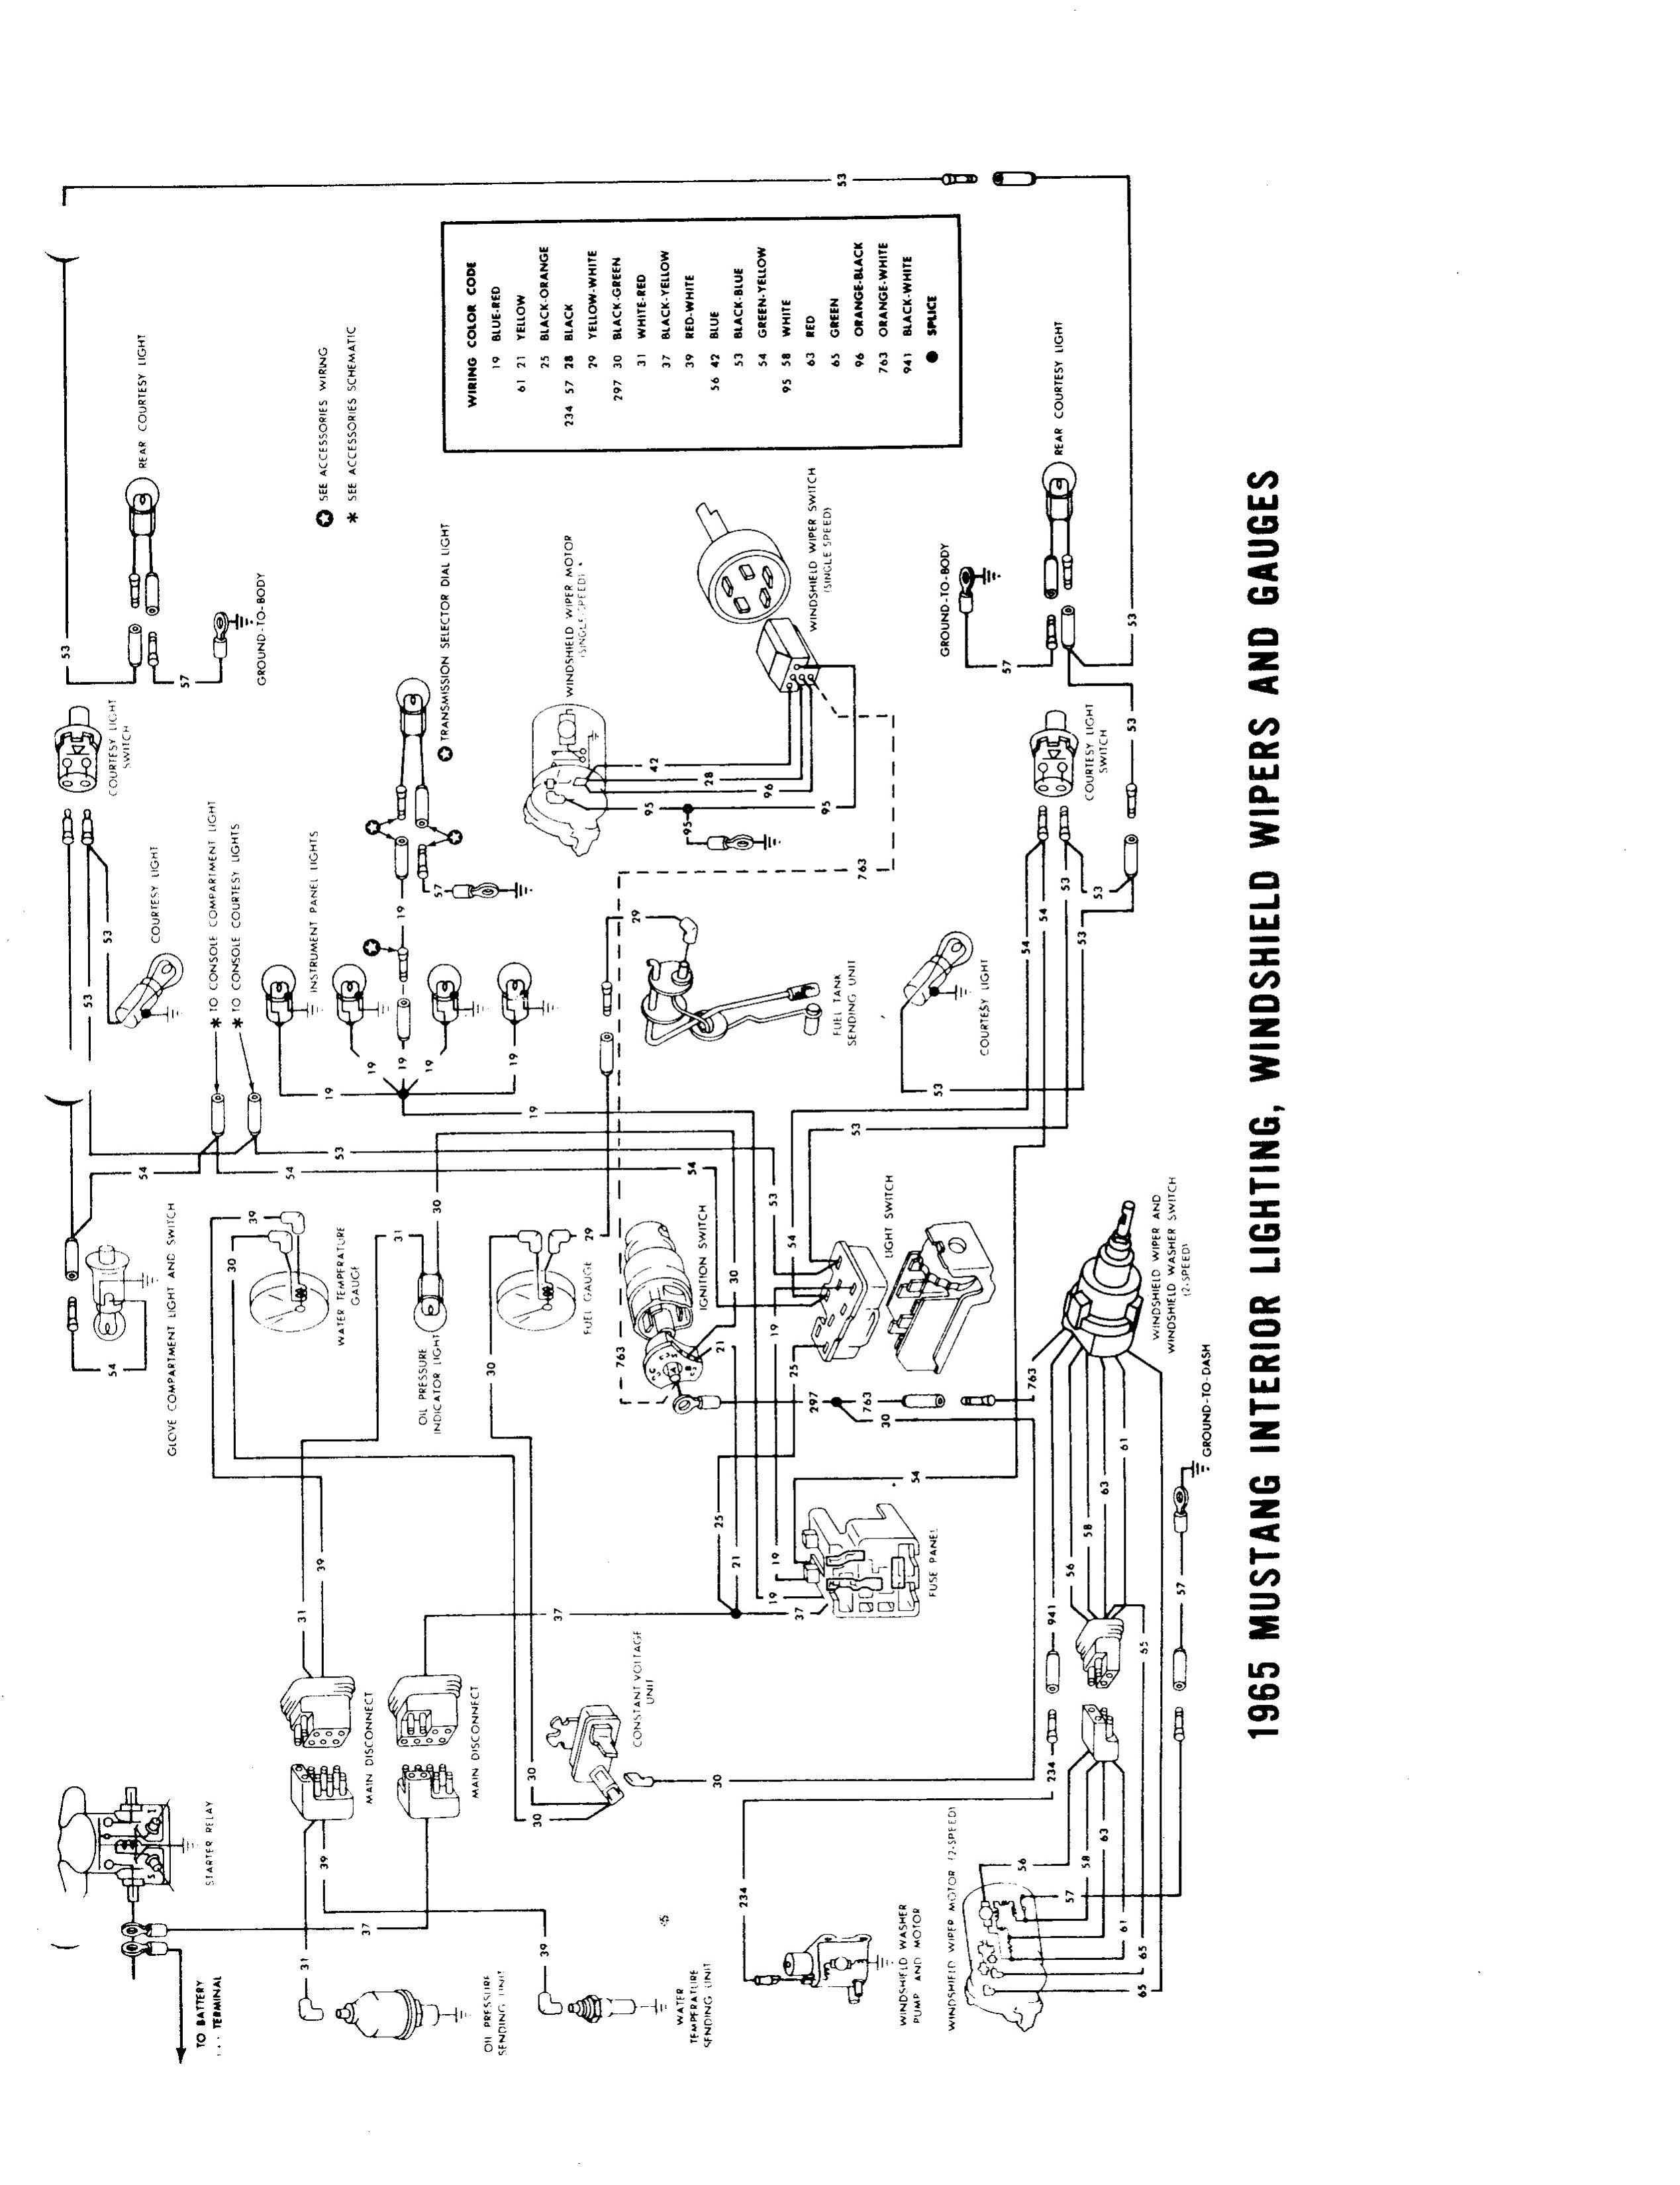 1964½-1965 Wiring Diagram Manual - Ford Mustang Forum - 1965 Mustang Wiring Diagram